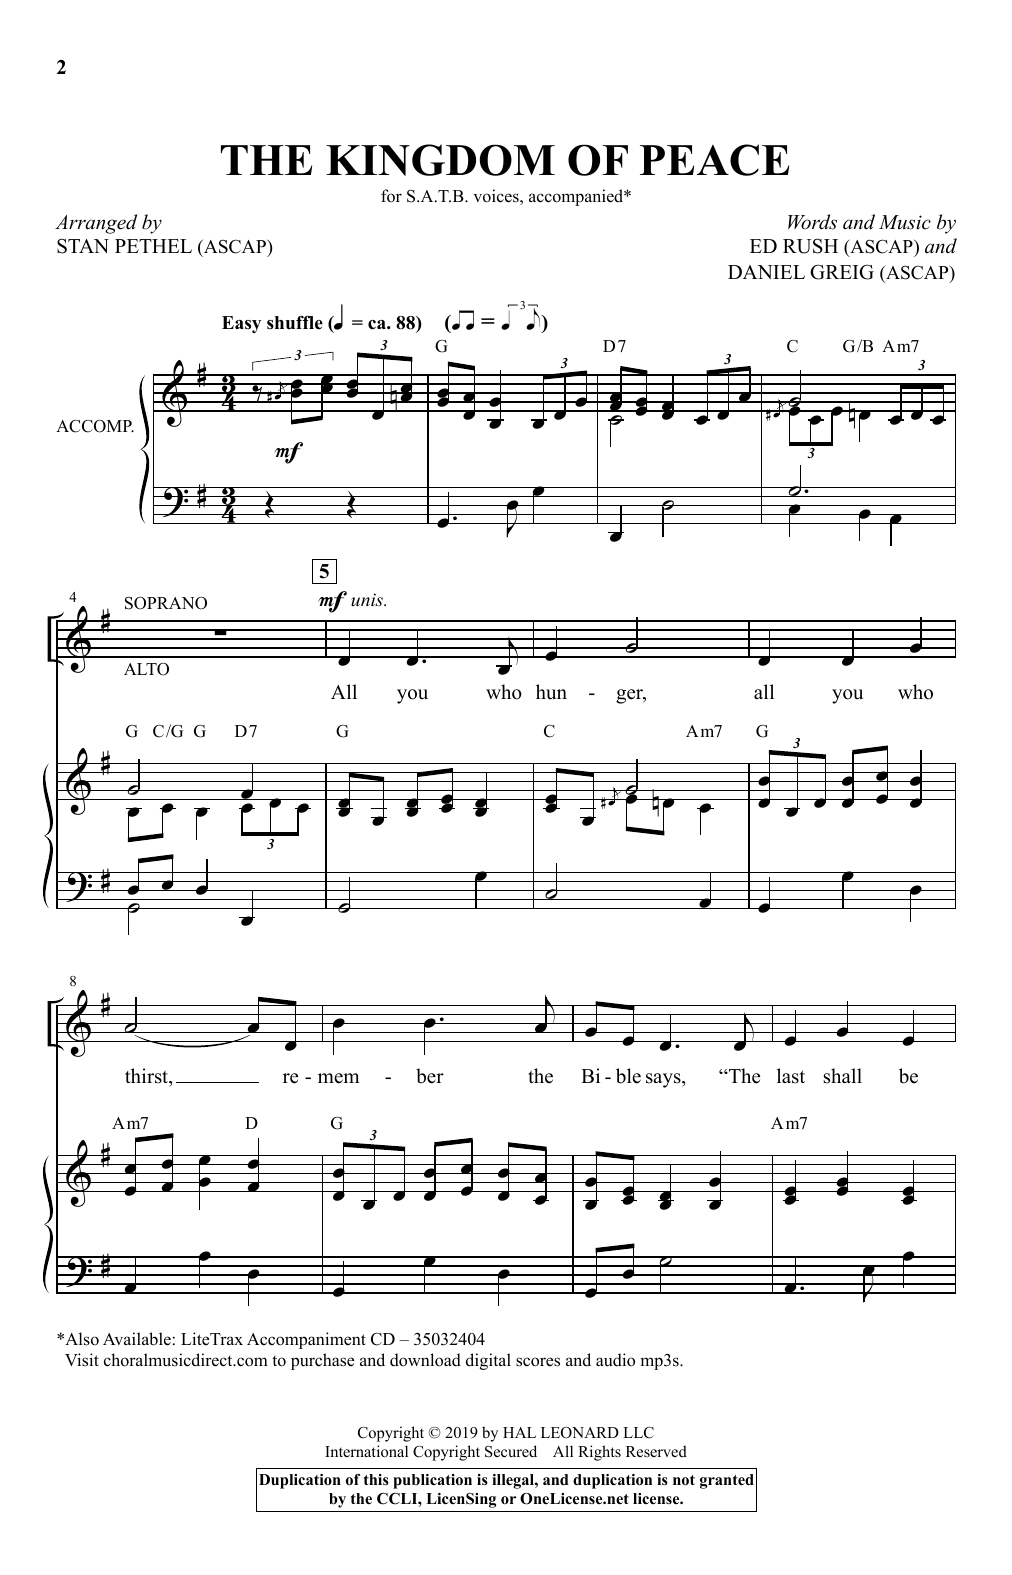 Ed Rush & Daniel Grieg The Kingdom Of Peace (arr. Stan Pethel) Sheet Music Notes & Chords for SATB Choir - Download or Print PDF